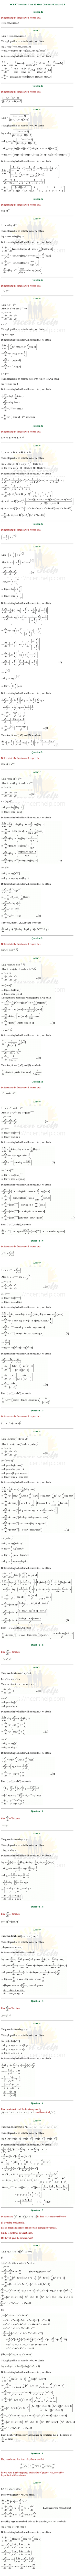 ncert solutions for class 12 Math Chapter 5 ex.5.5